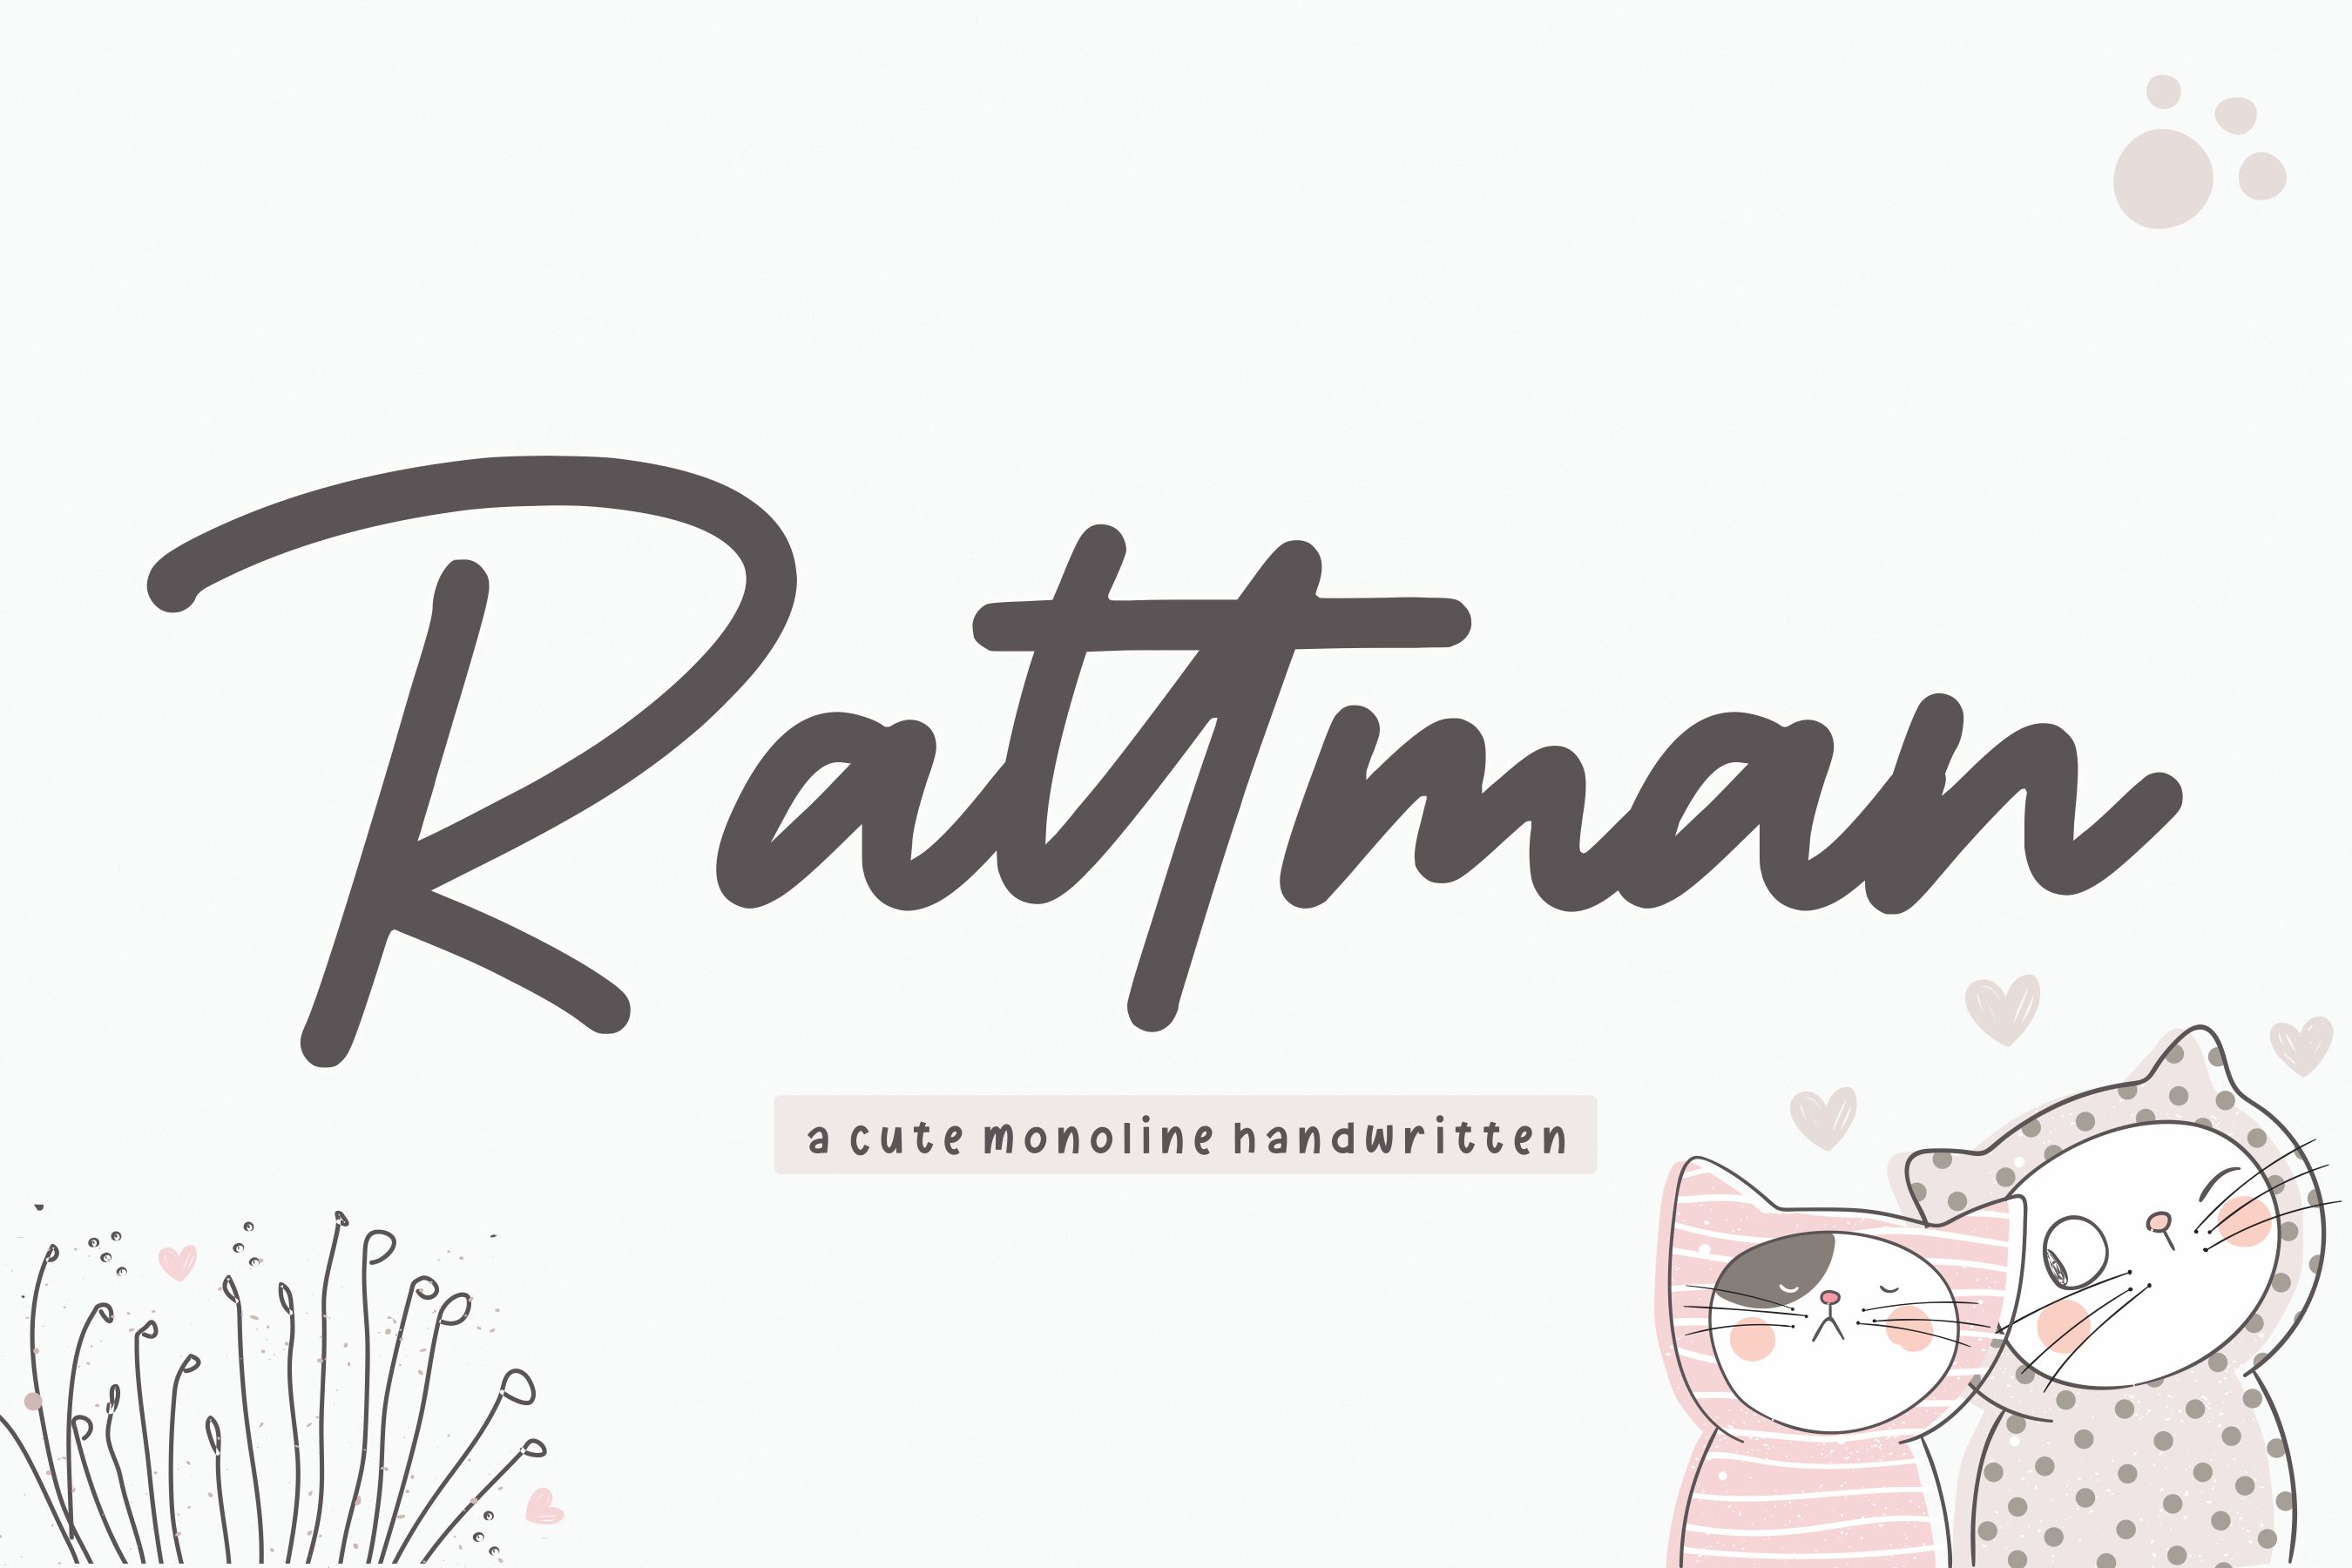 Rattman